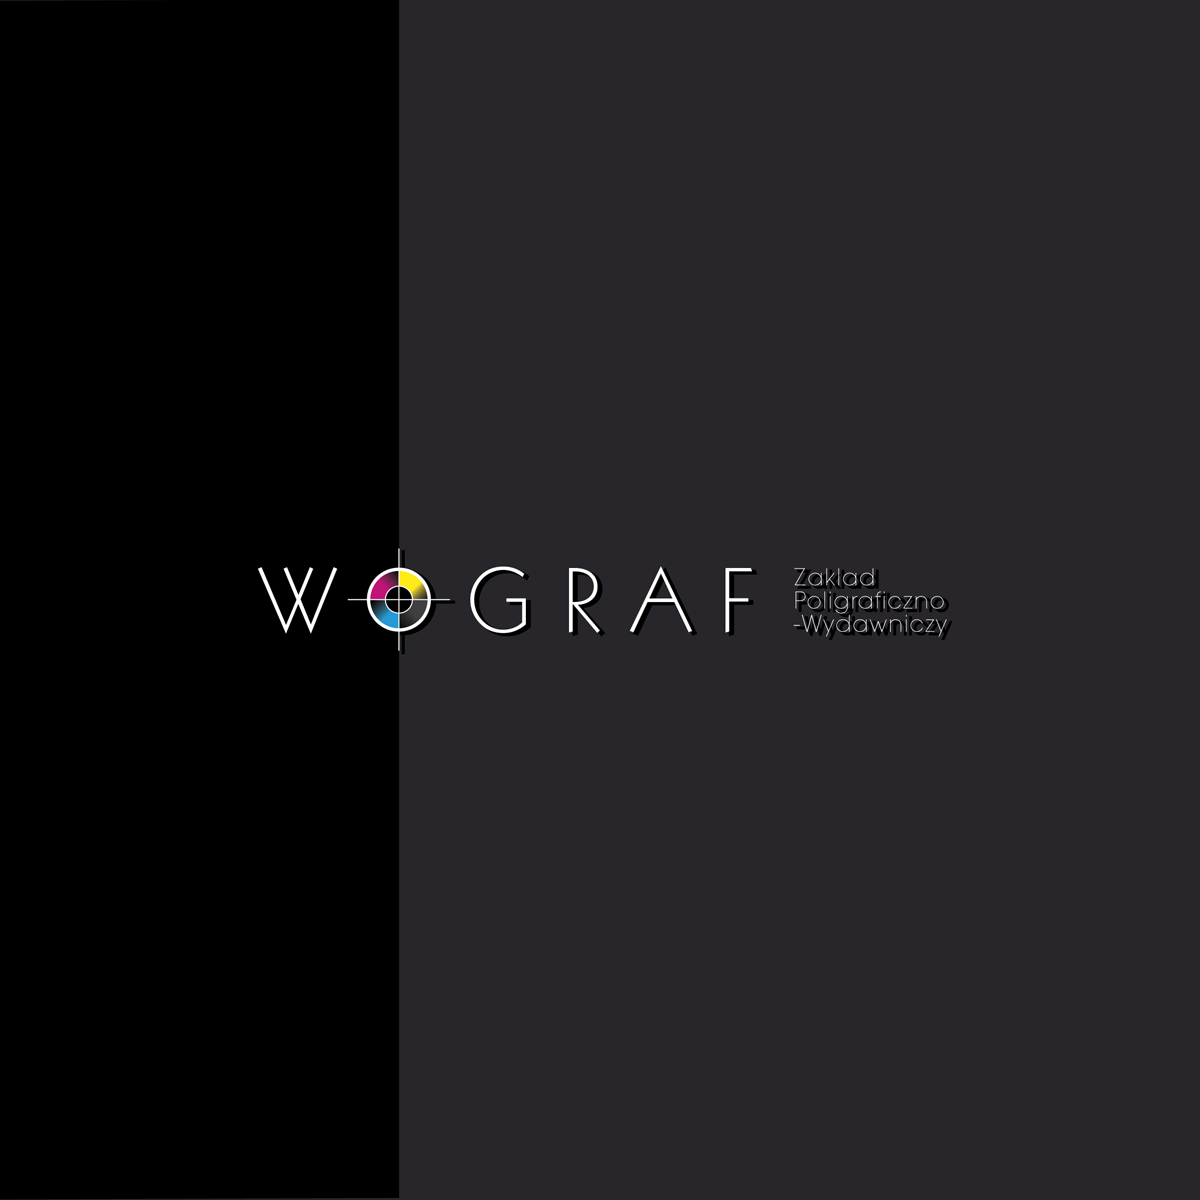 WOGRAF logo